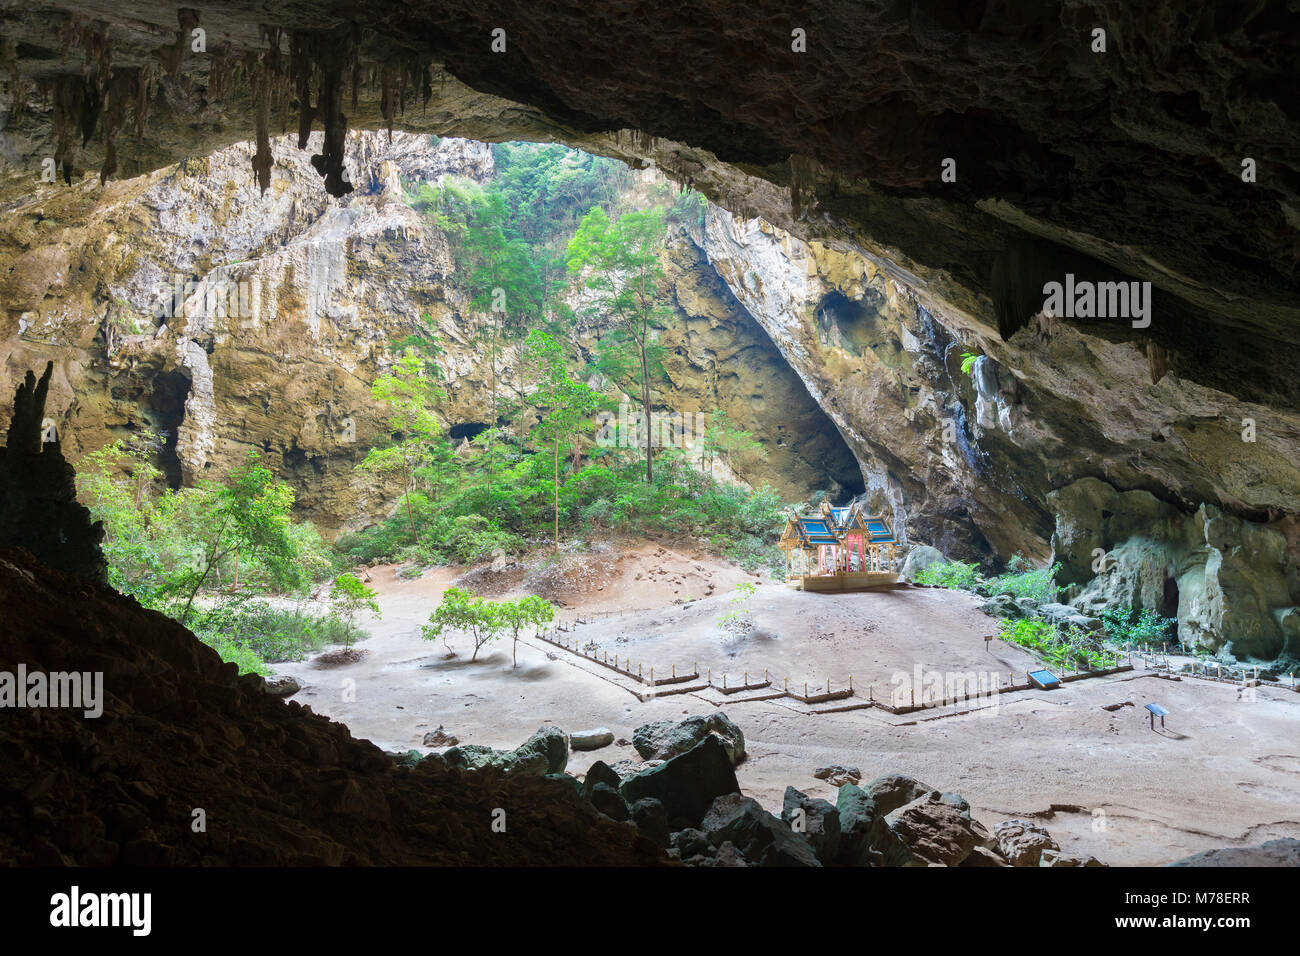 Grotte de Phraya Nakhon, Khao Sam Roi Yot national park, province de Prachuap Khiri Khan, Thaïlande Banque D'Images